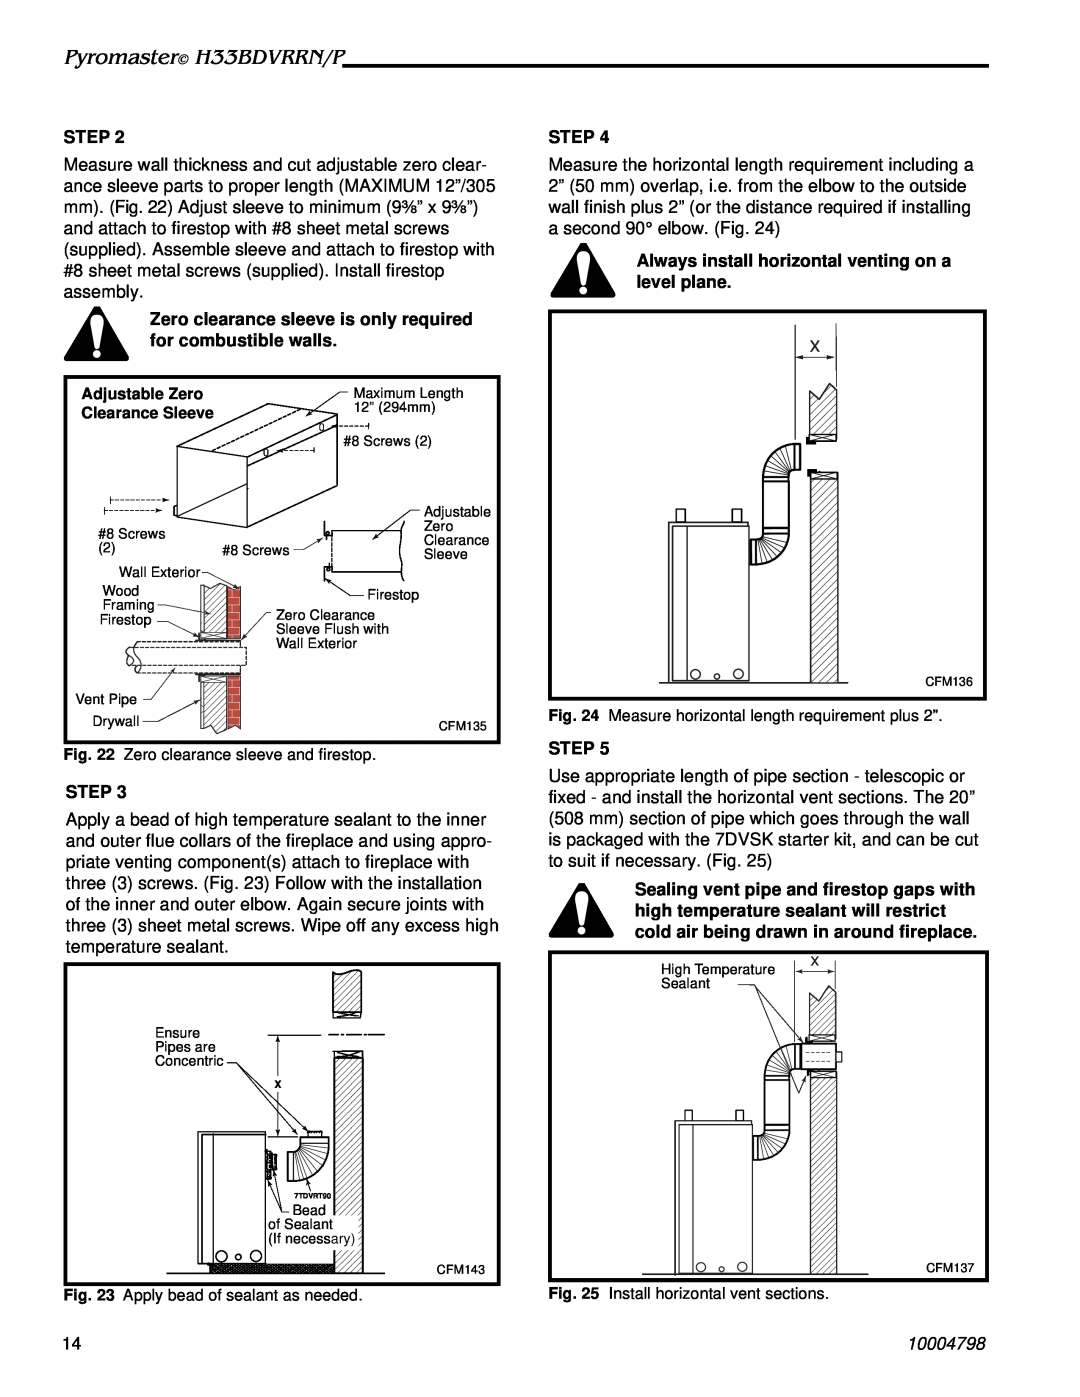 Vermont Casting H33BDVRRNP manual Pyromaster H33BDVRRN/P, Step, 10004798 